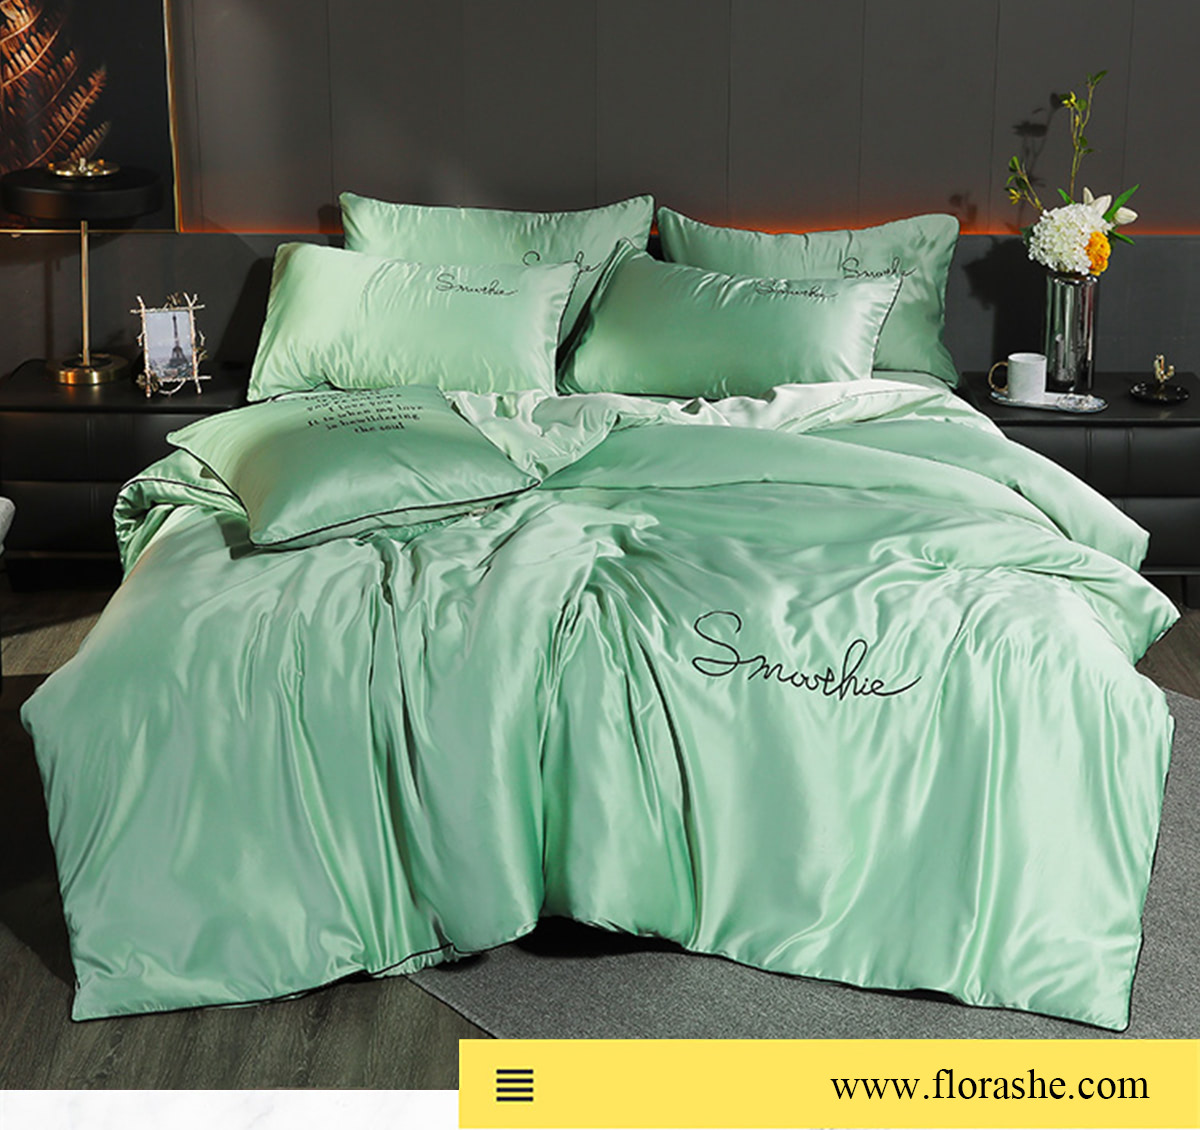 Silky-Satin-Duvet-Cover-Flat-Sheet-Pillowcase-Bedding-4Pcs-Set17